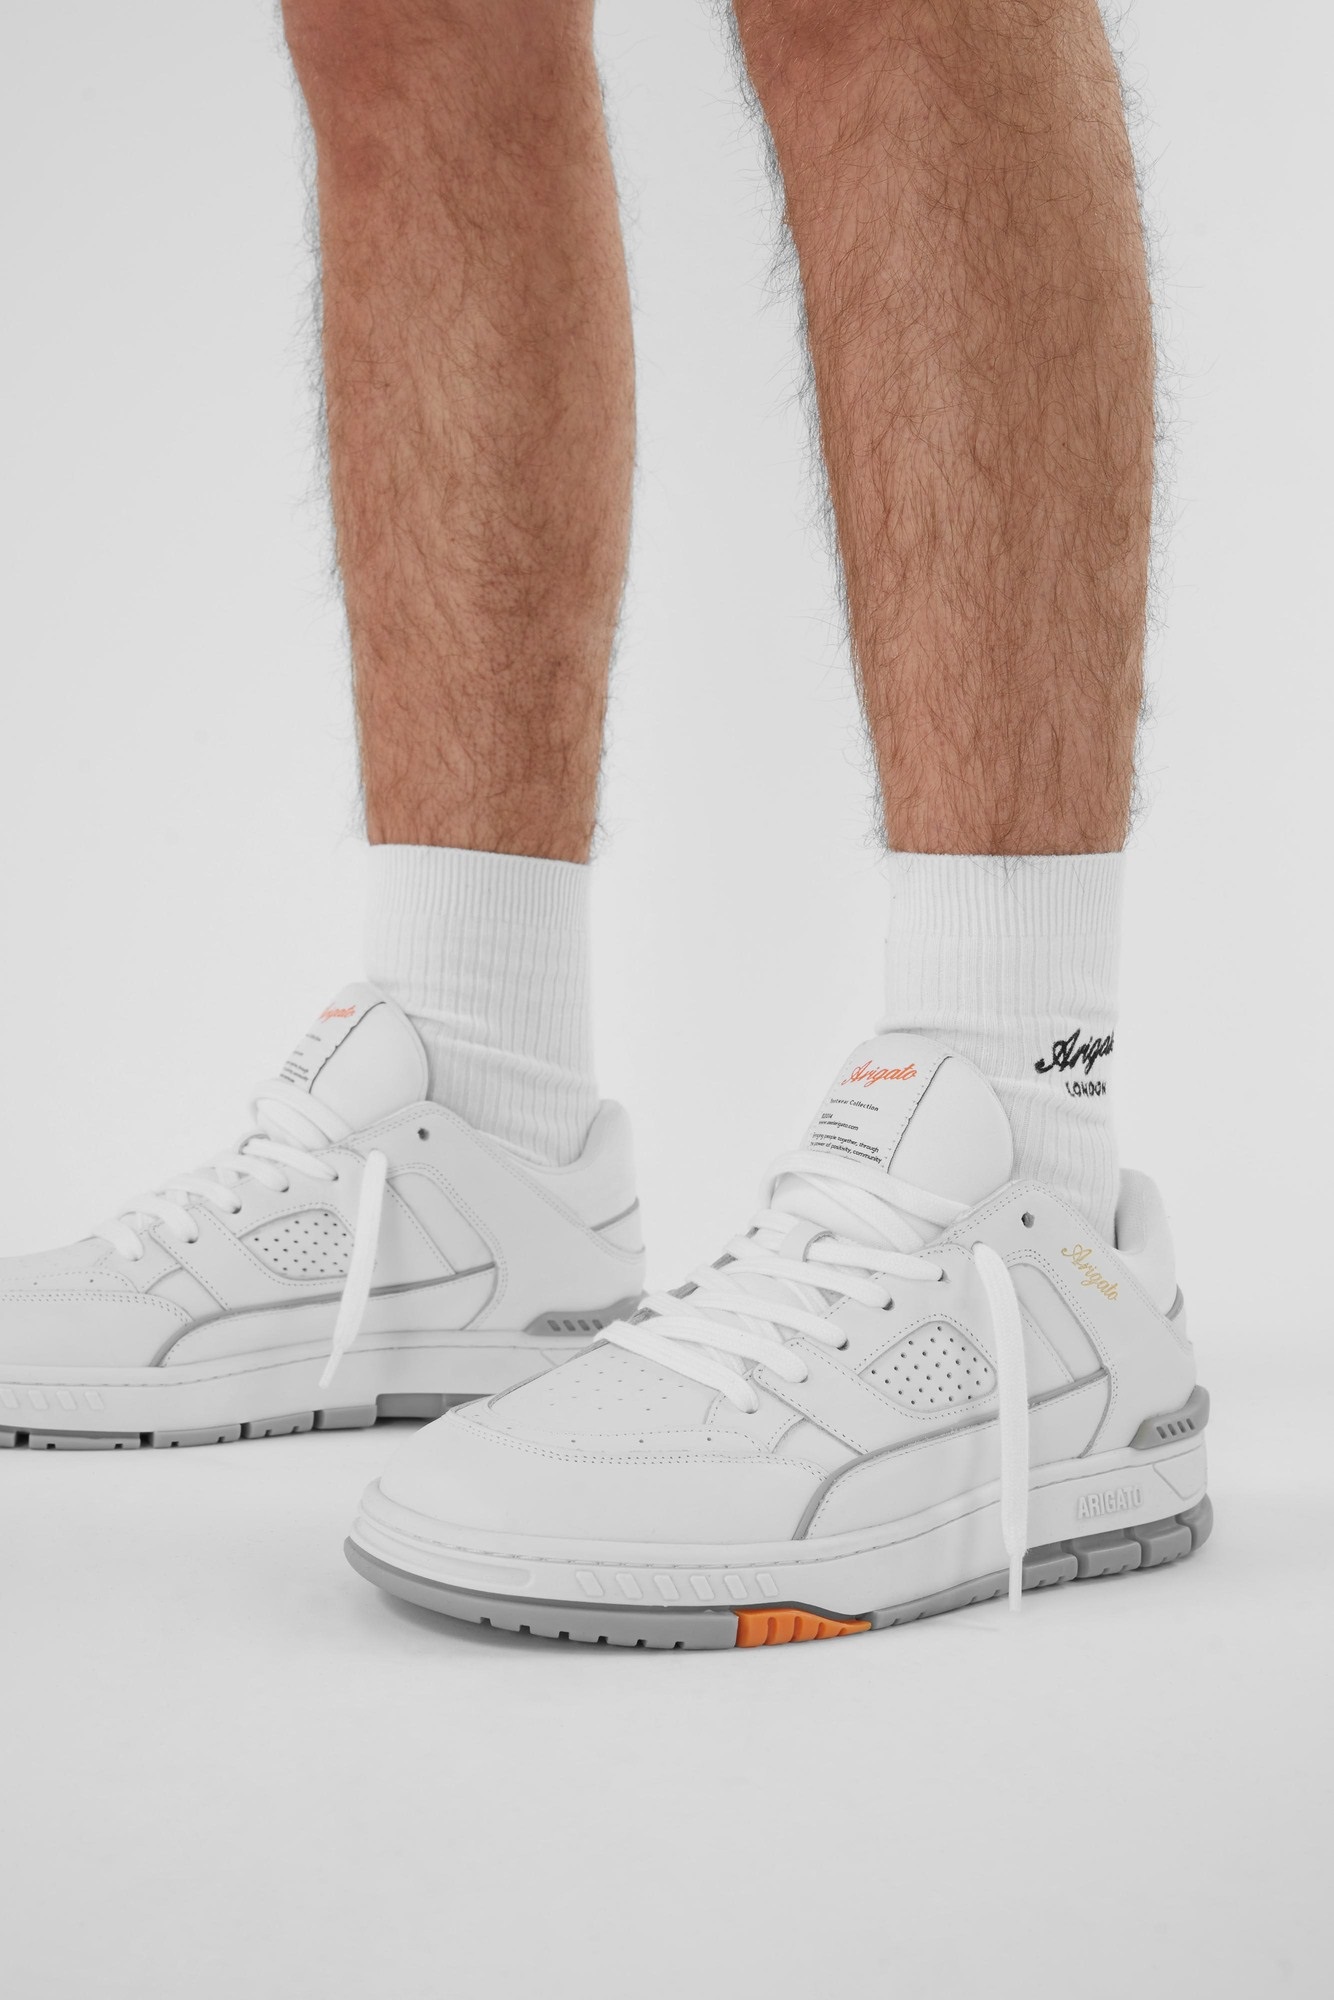 AXEL ARIGATO Area Sneaker in White/Grey 47